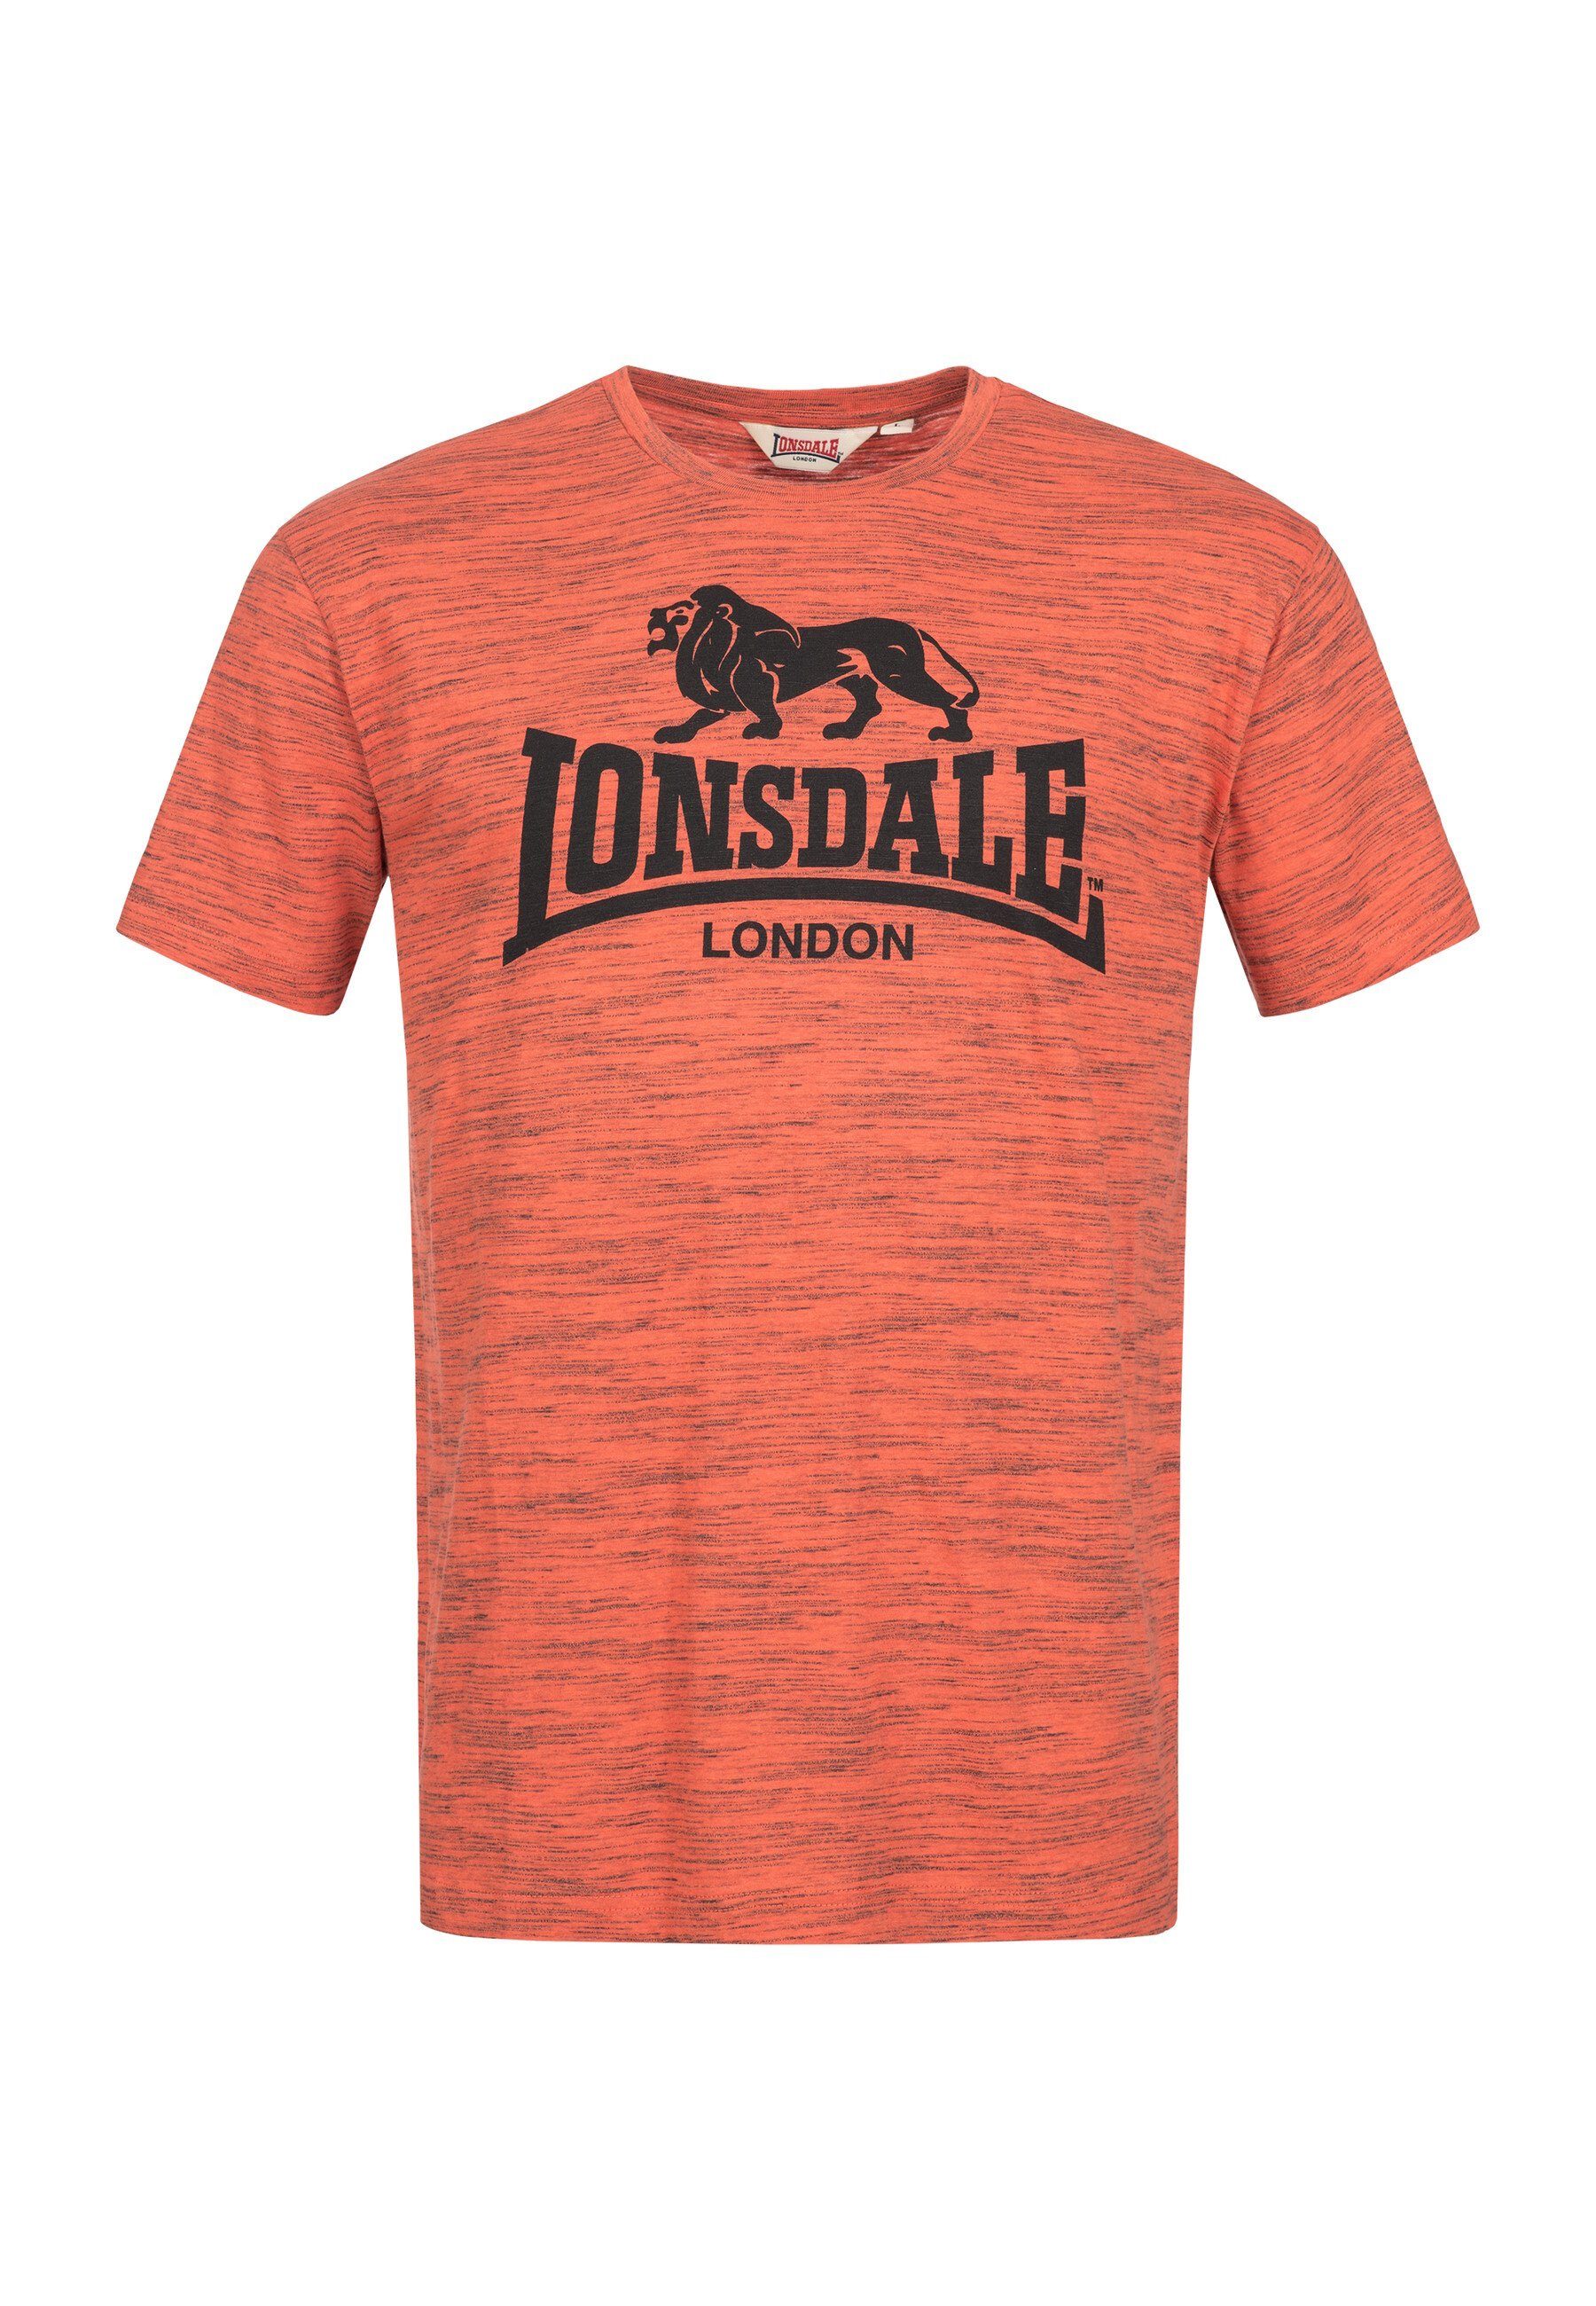 orange GARGRAVE Kurzarm-T-Shirt mit Shirt Lonsdale T-Shirt